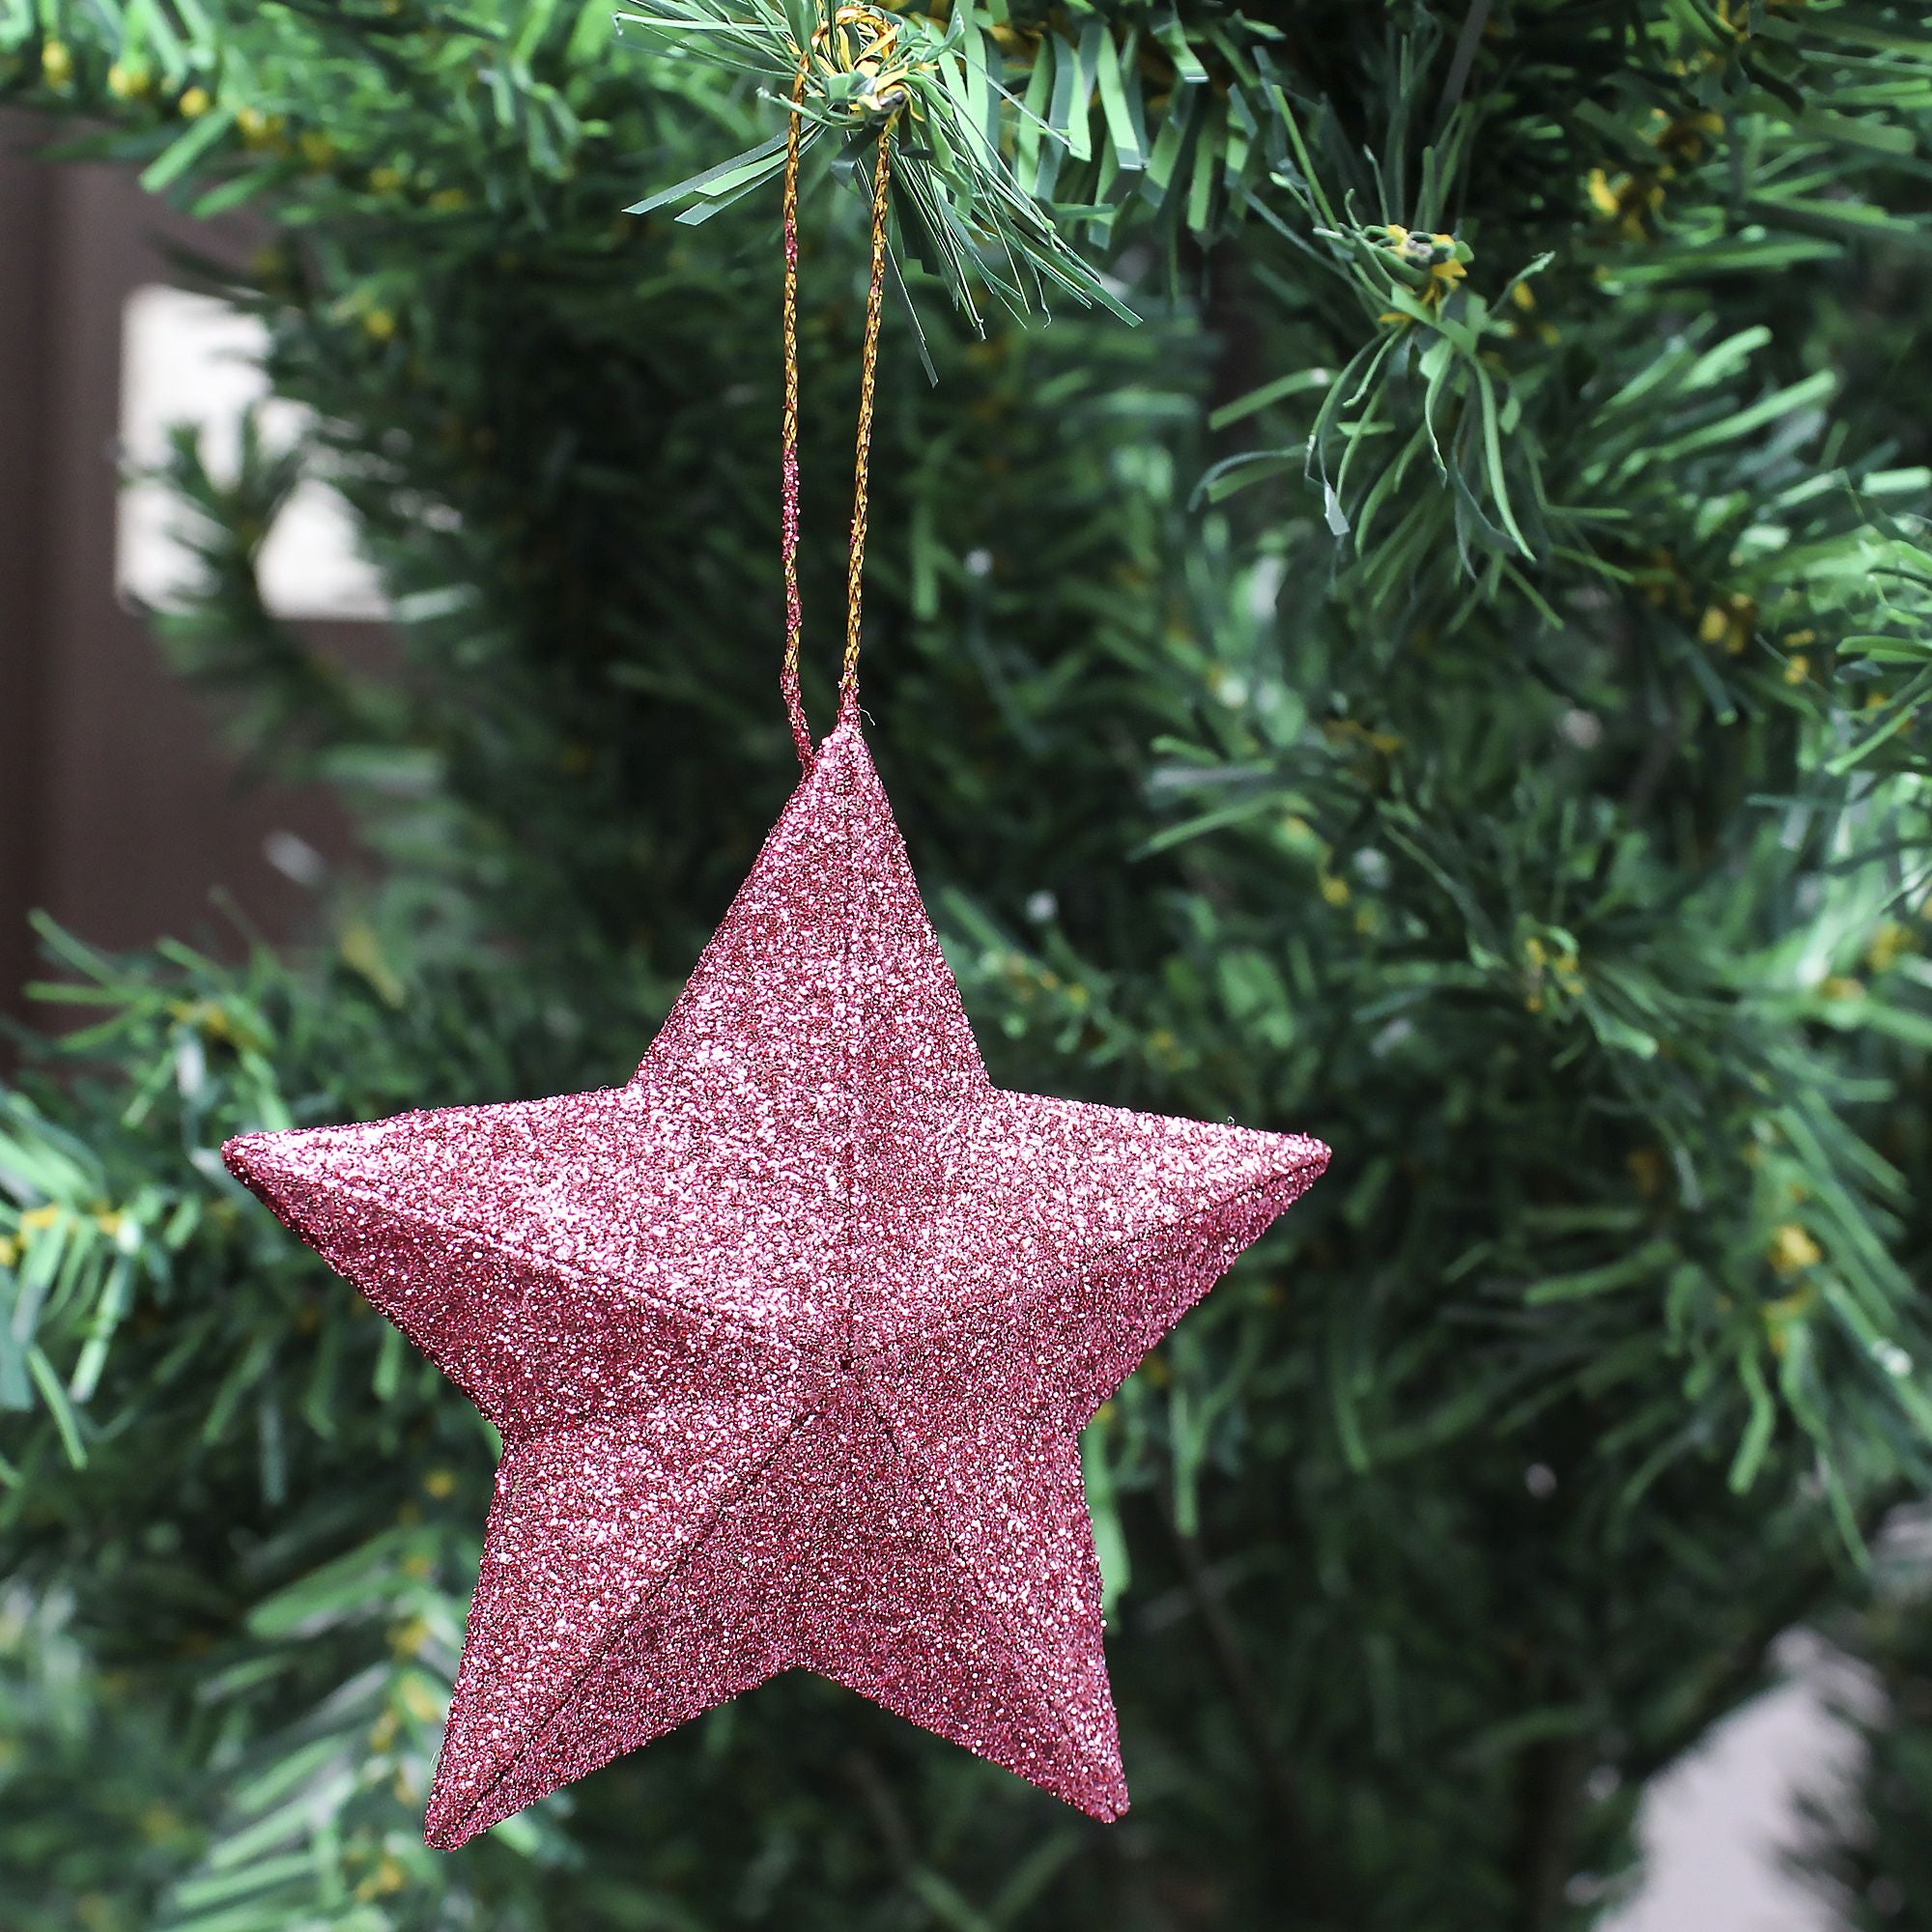 Handmade Christmas Ornaments - 3D Glitter Stars, 3.25inch, Pink, 4pc